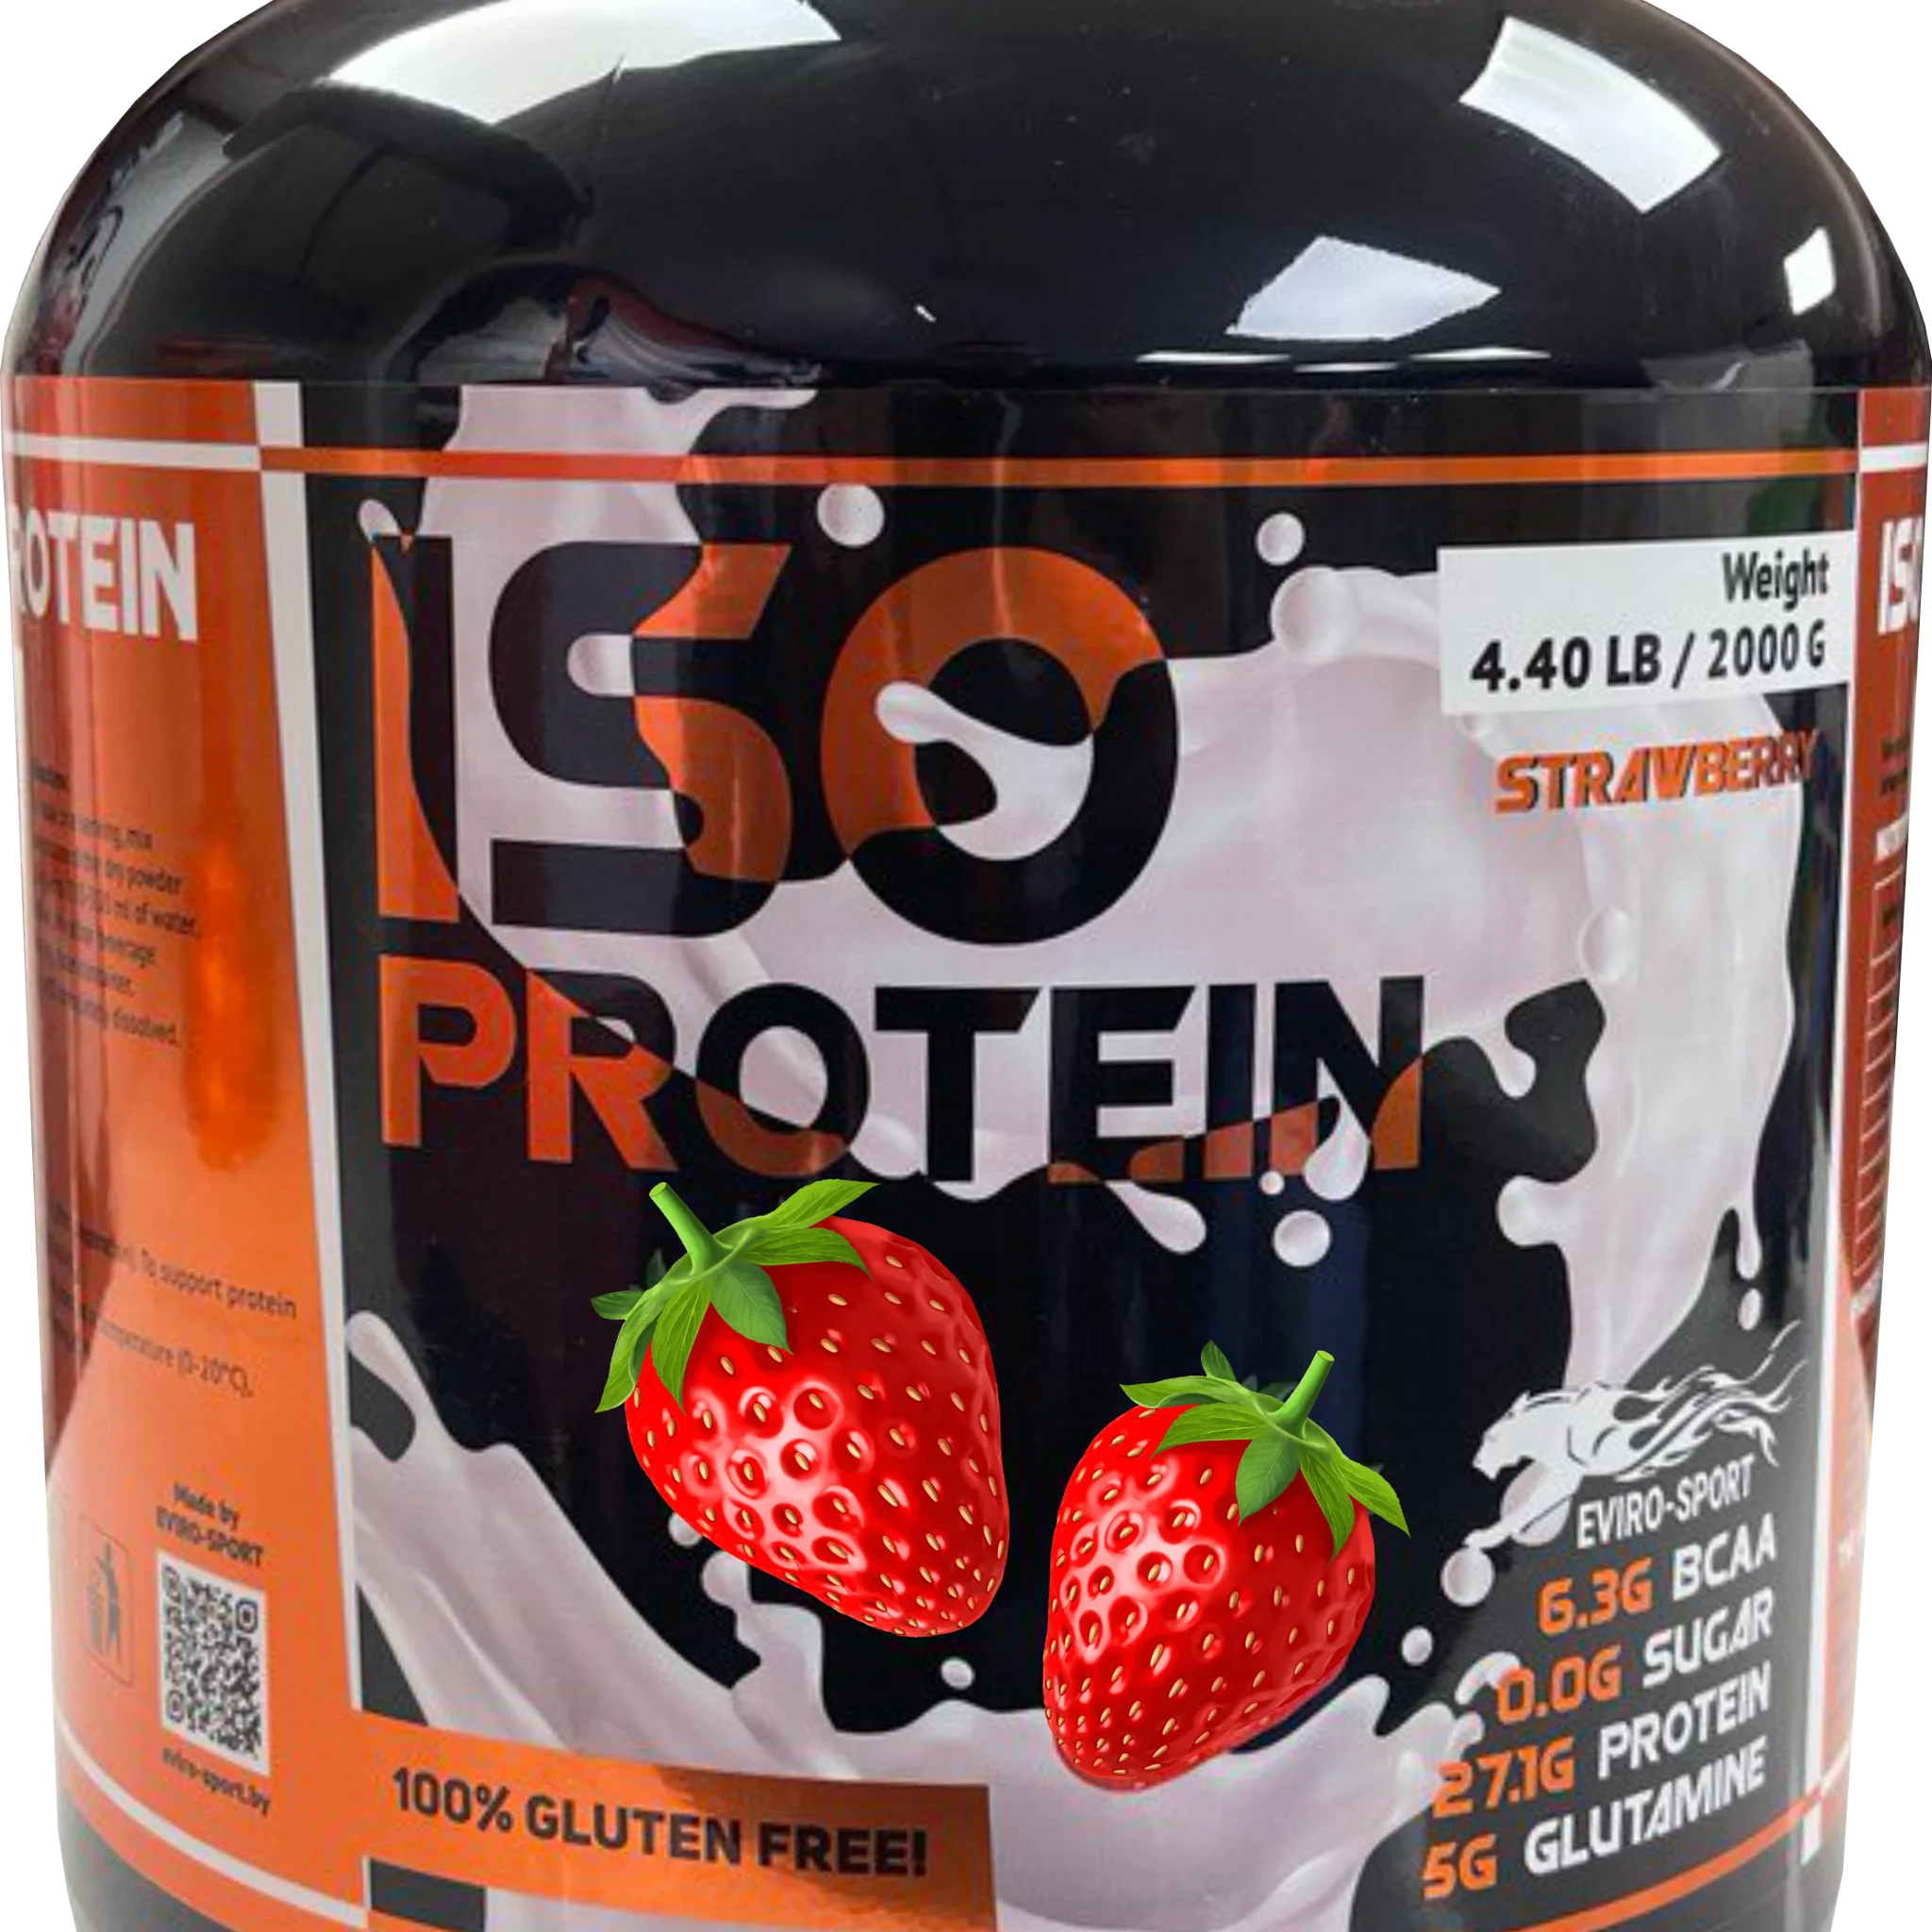 Protein ISO Protein USA 2000g